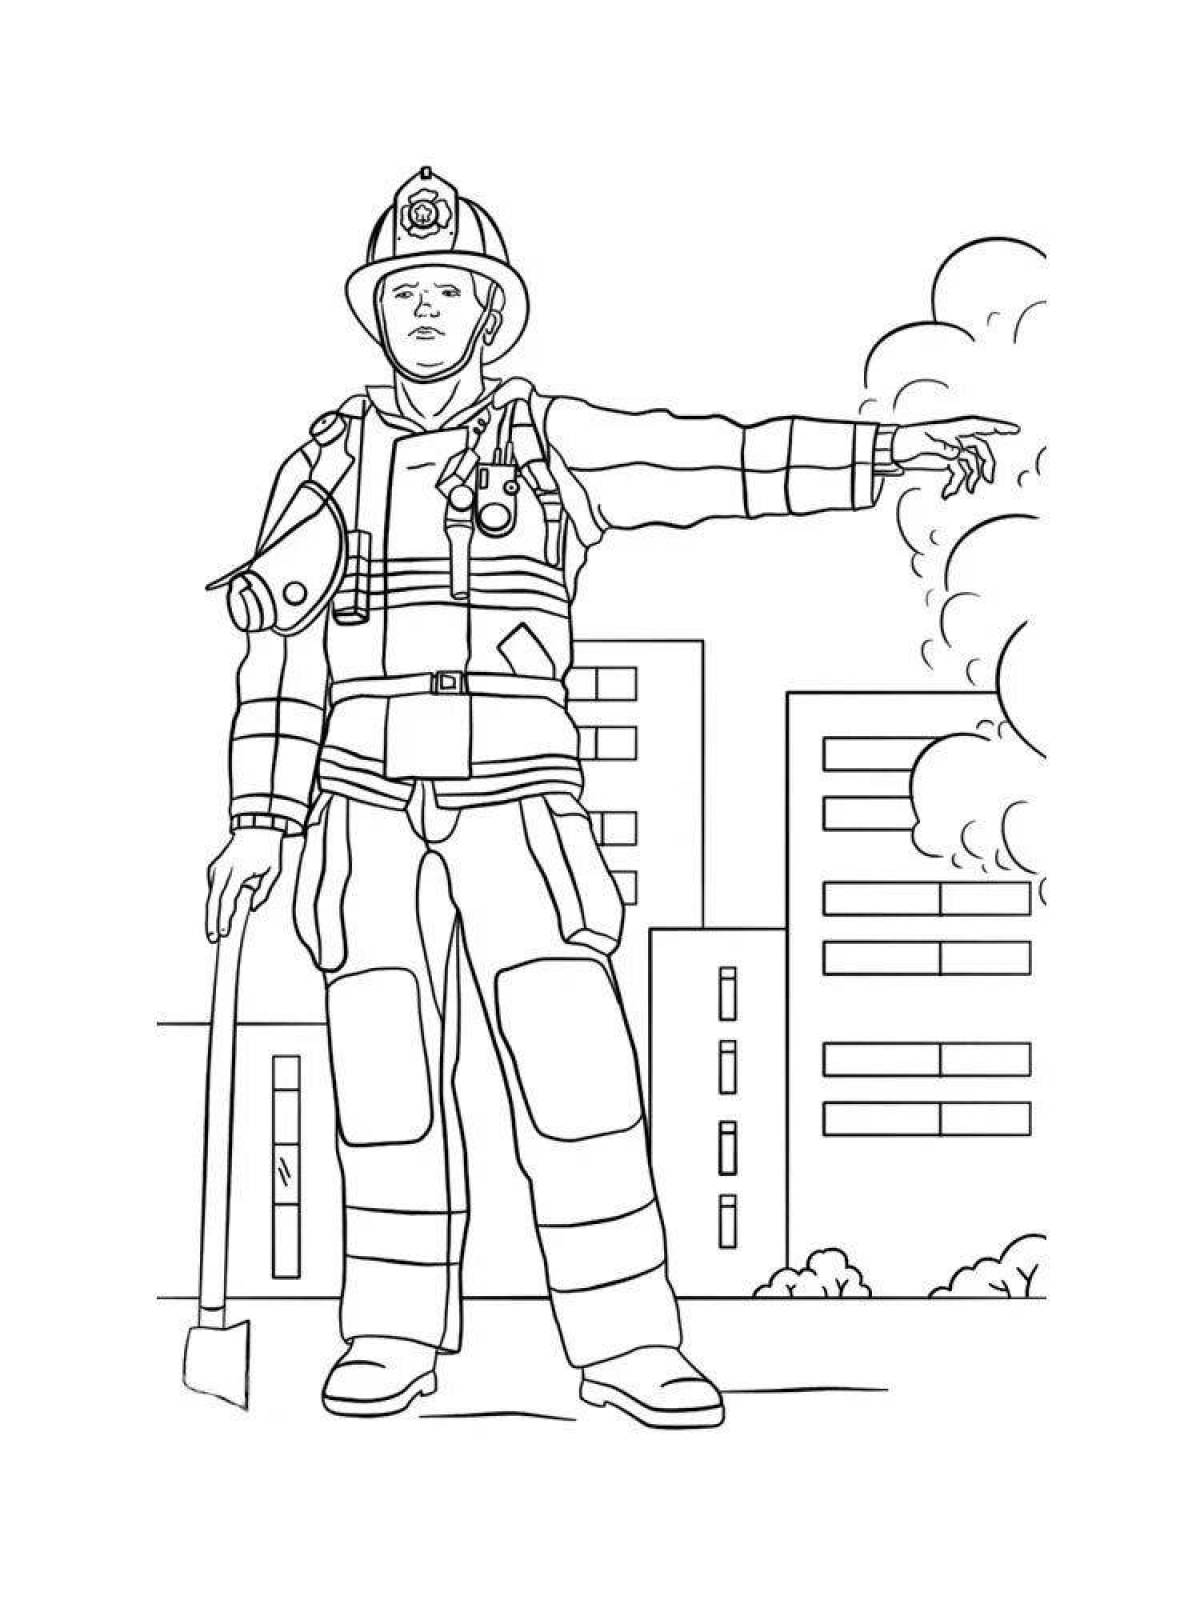 Charming drawing of a fireman